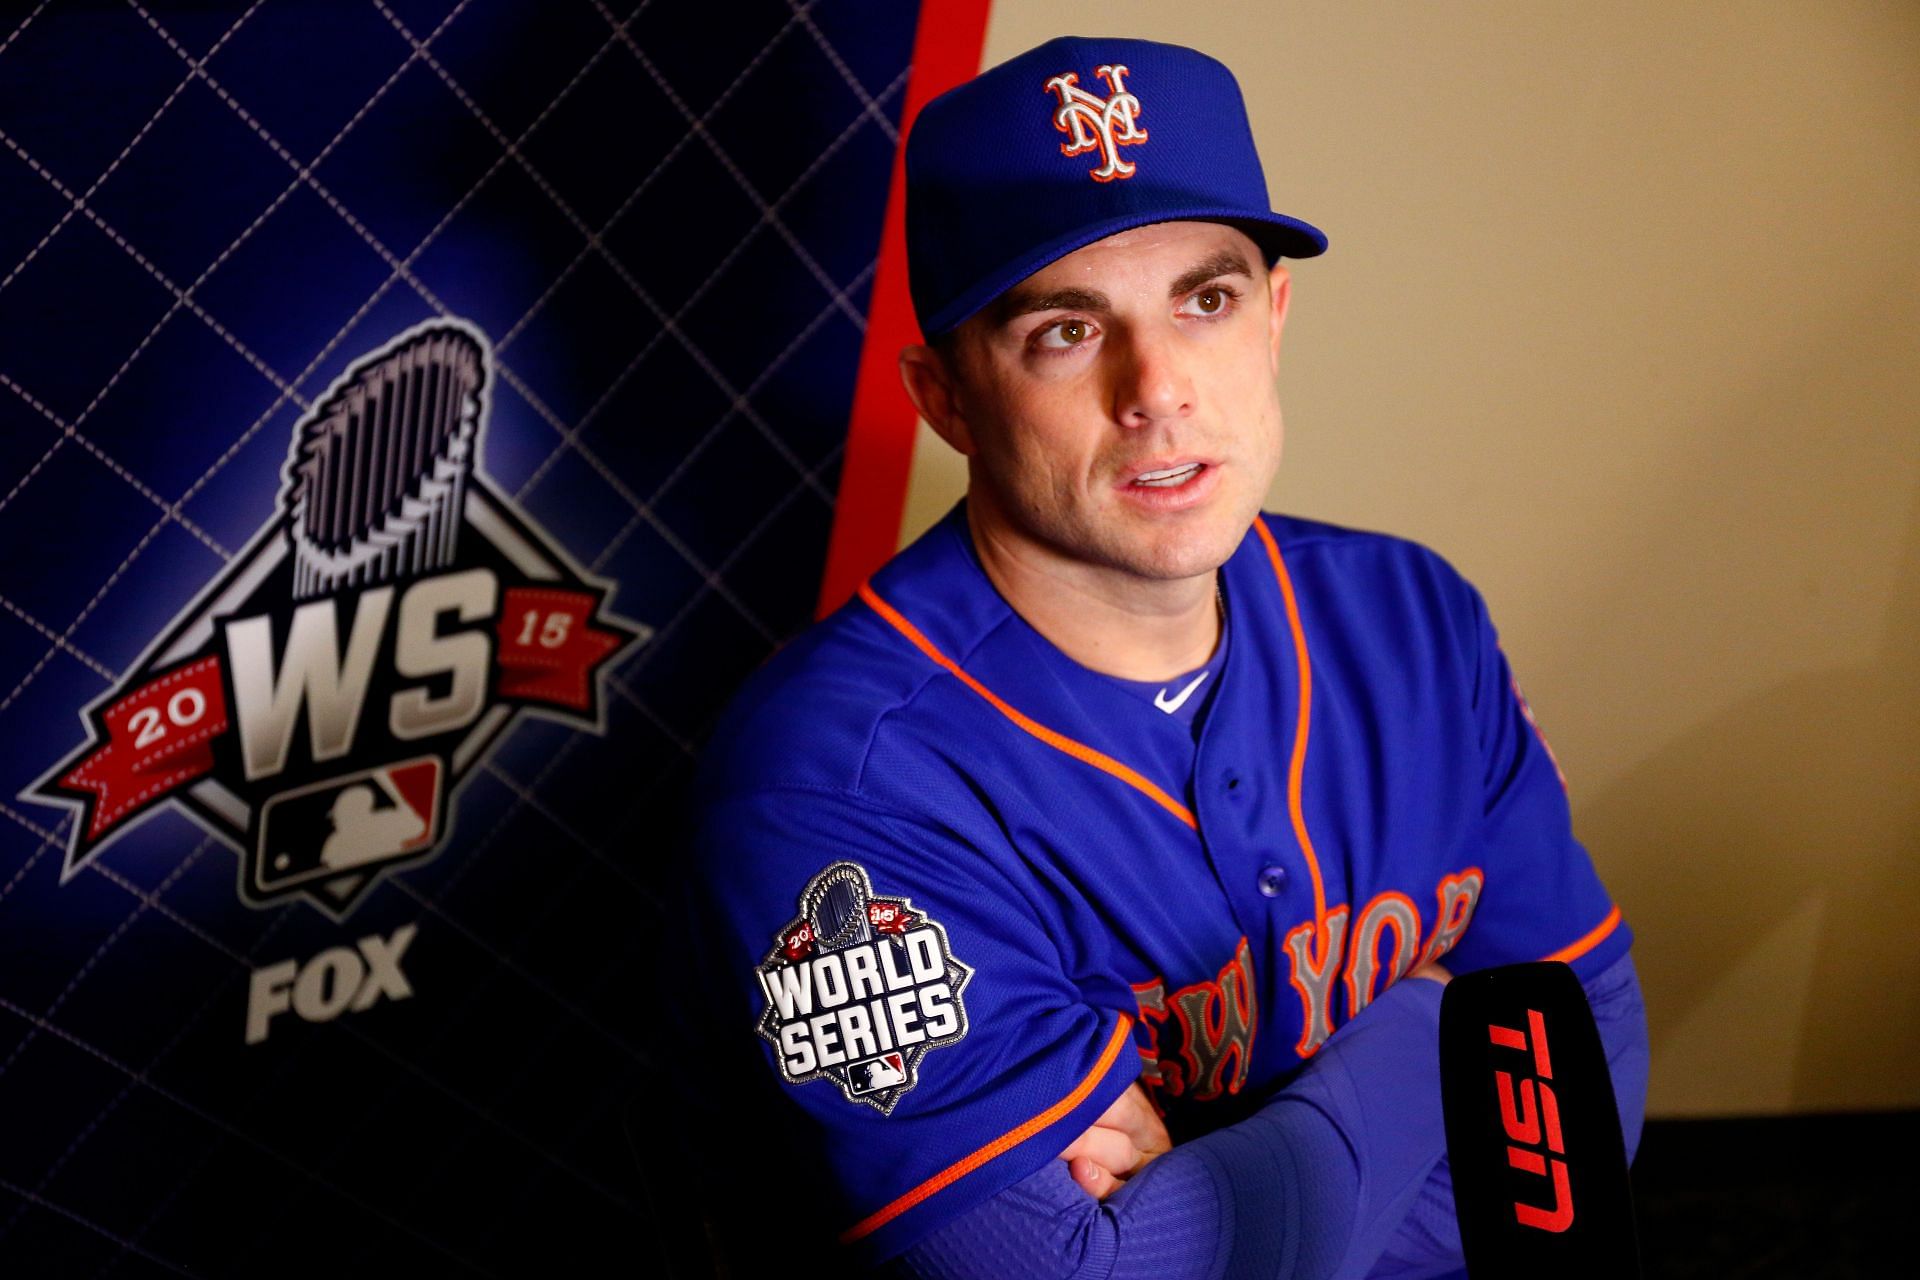 Mets send David Wright to New York for rib cage exam - NBC Sports